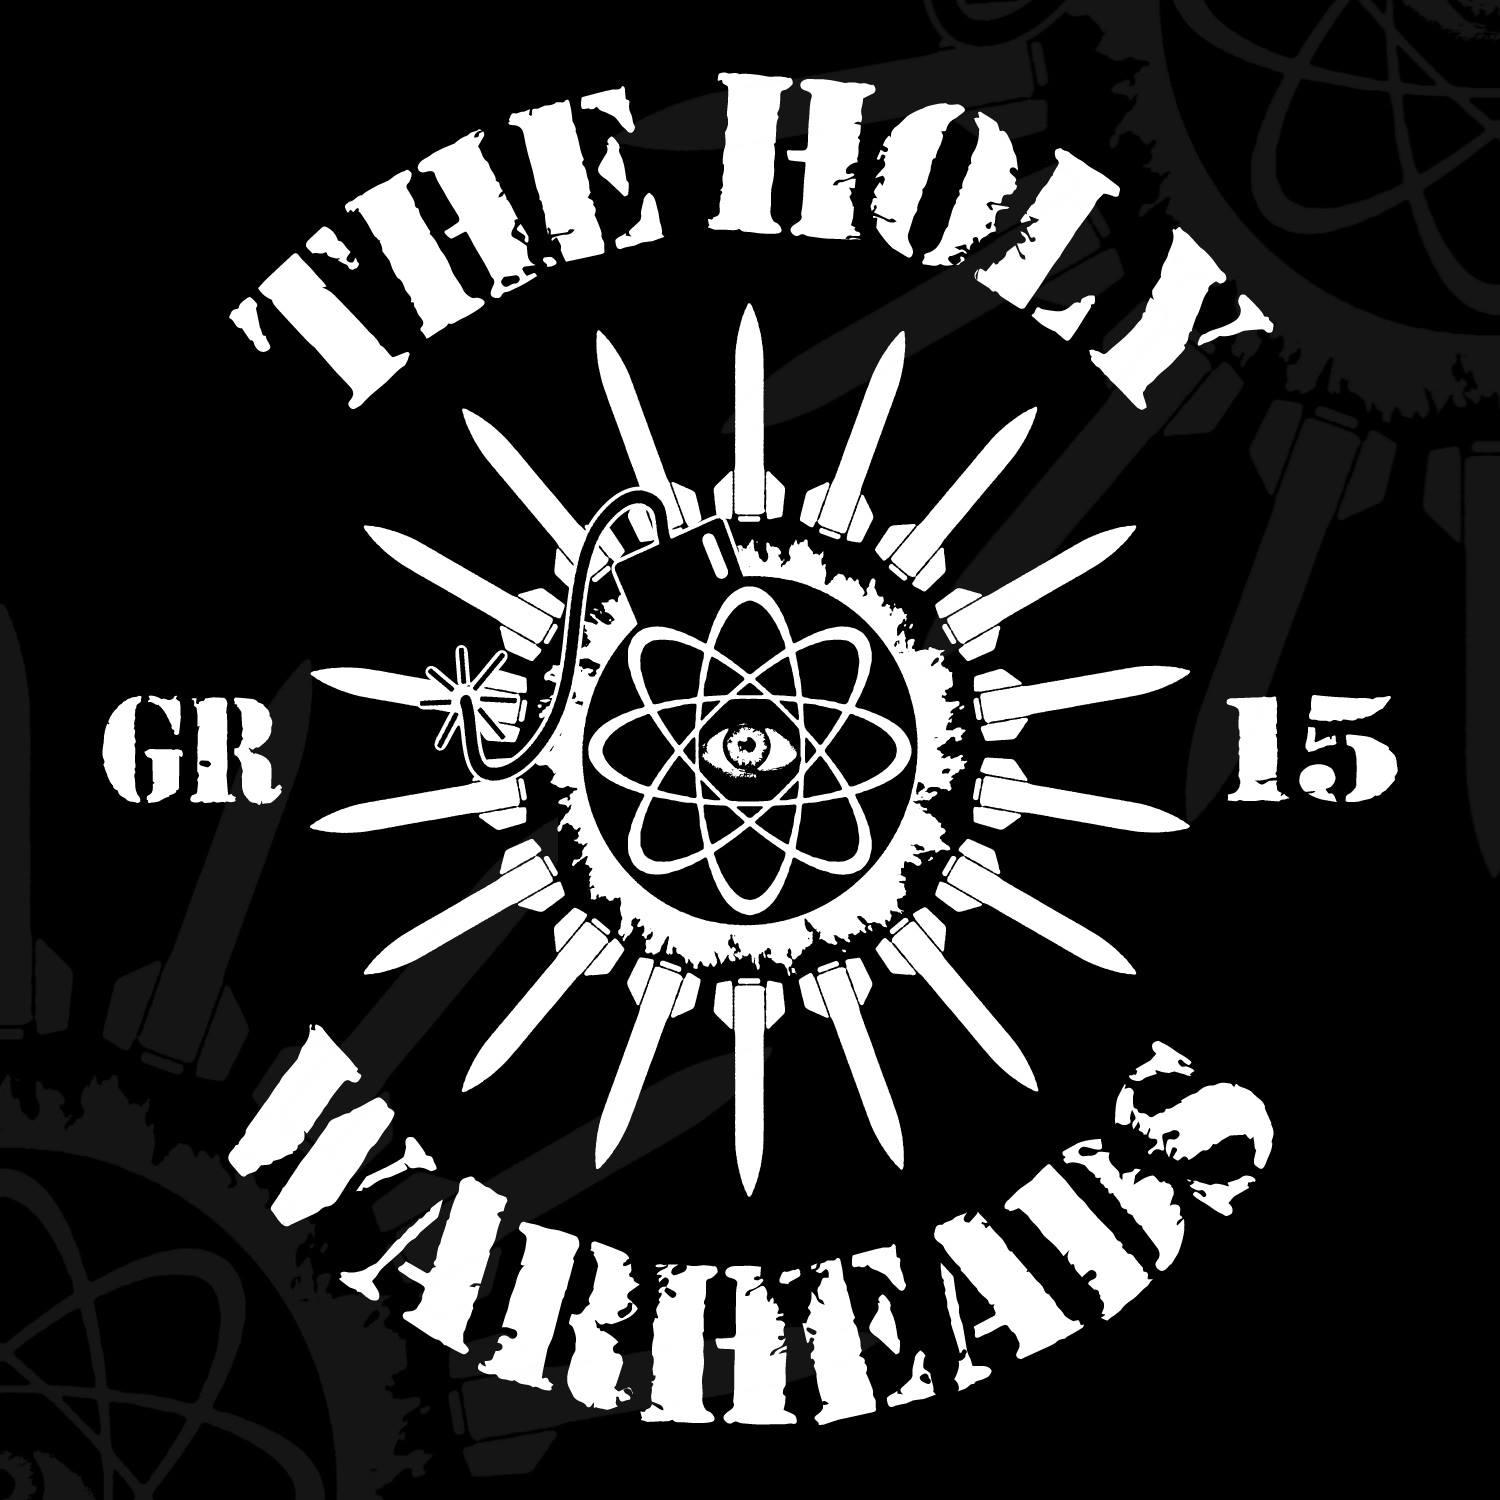 The Holy Warheads